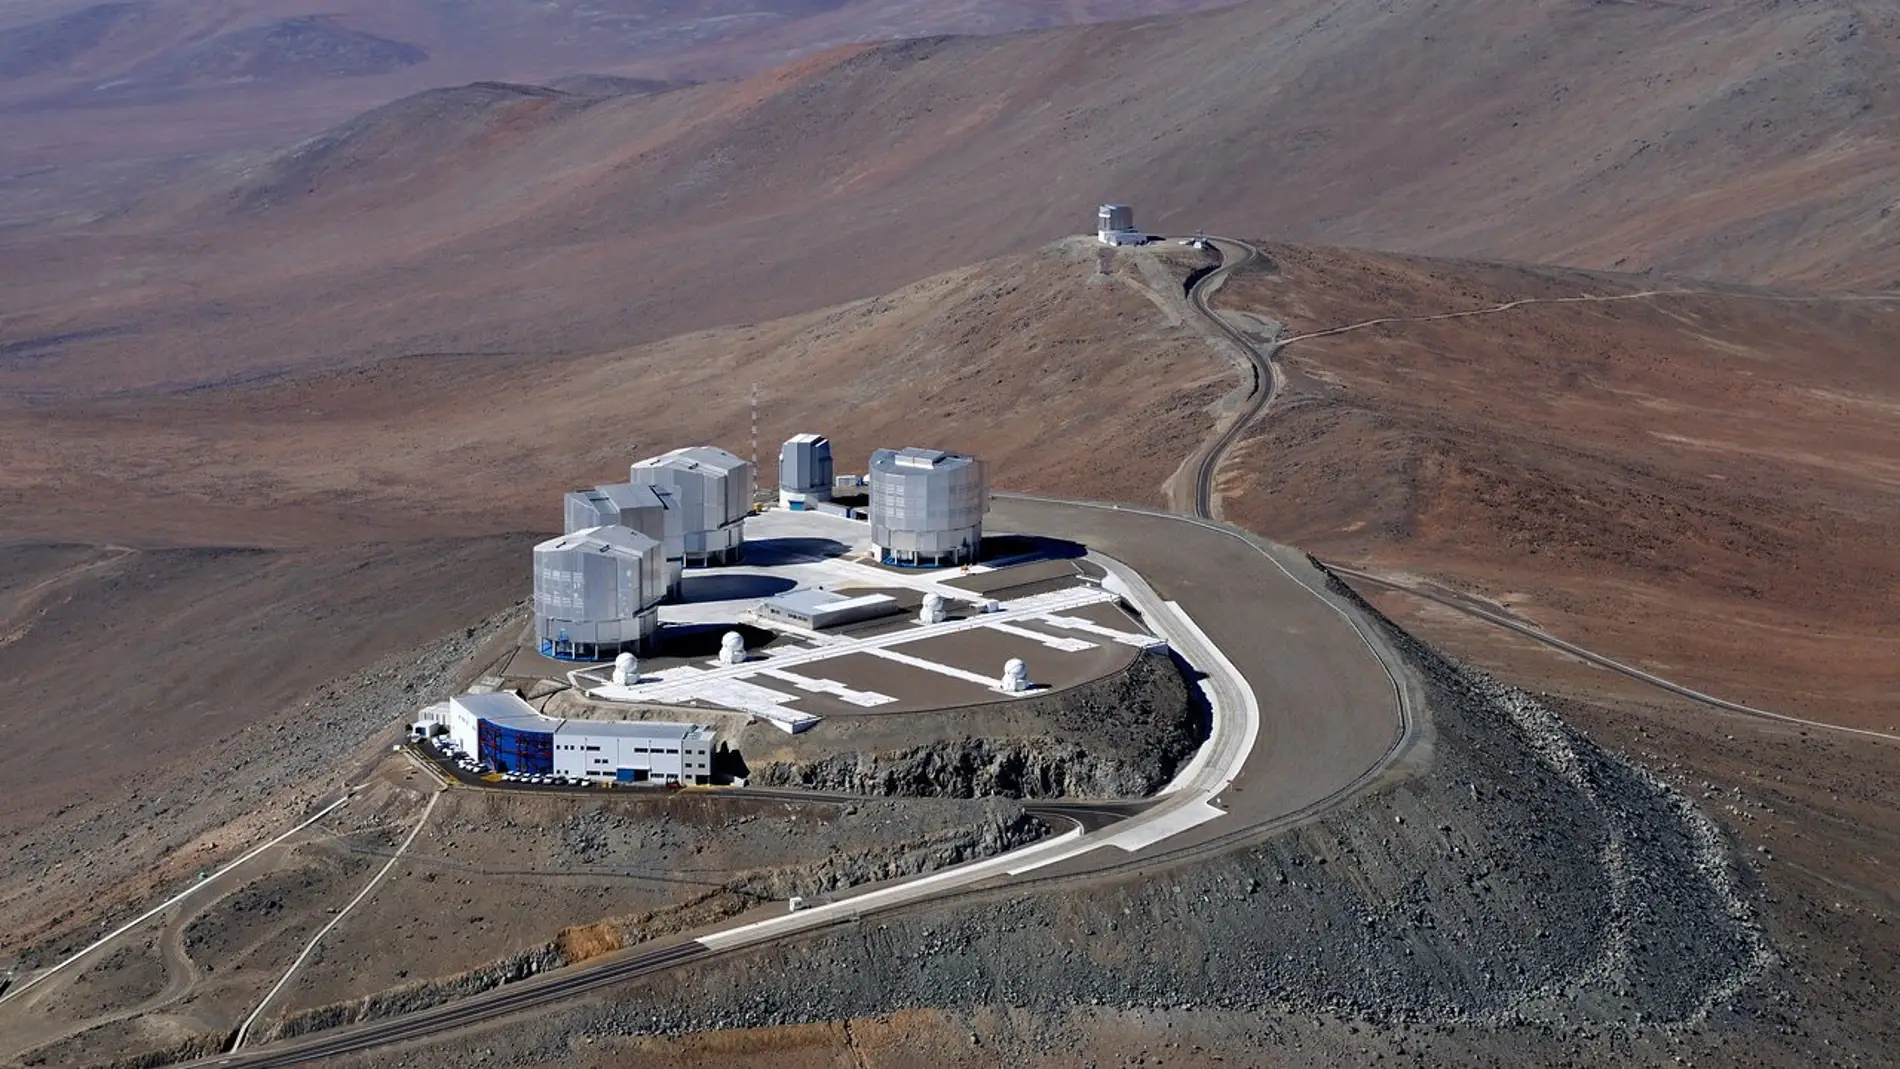 Telescopio VLT, Very Large Telescope, situado en Chile